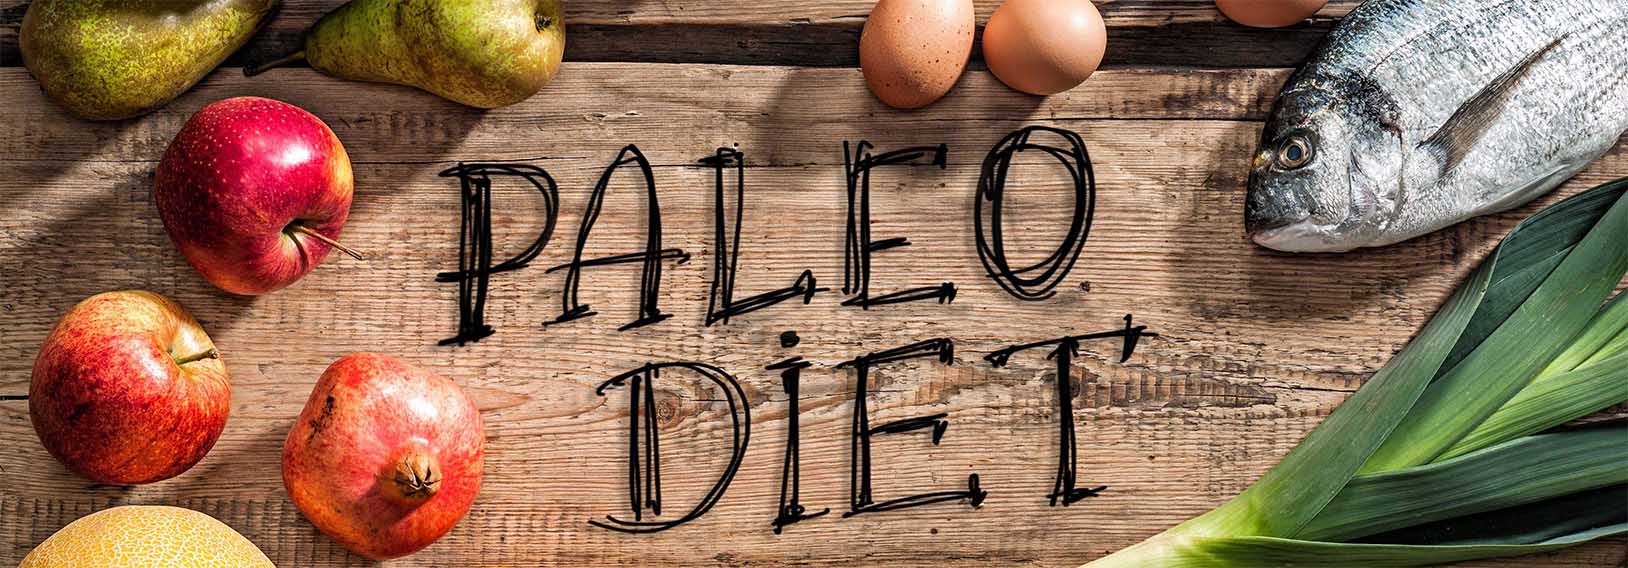 How To Achieve The Paleo Diet